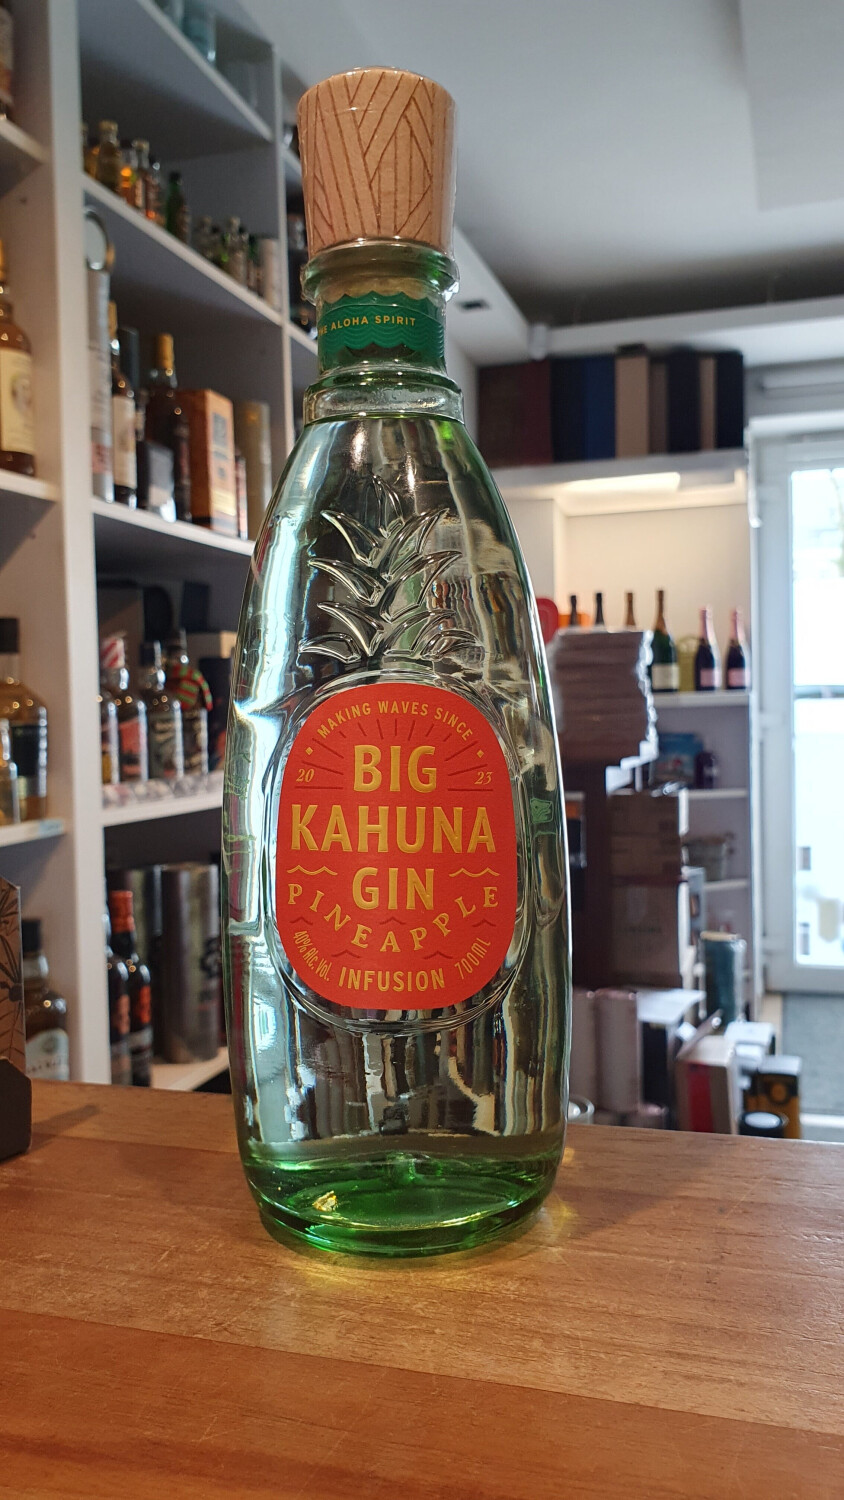 Perola Big Kahuna Gin 0,7l 40% ab 29,80 € | Preisvergleich bei